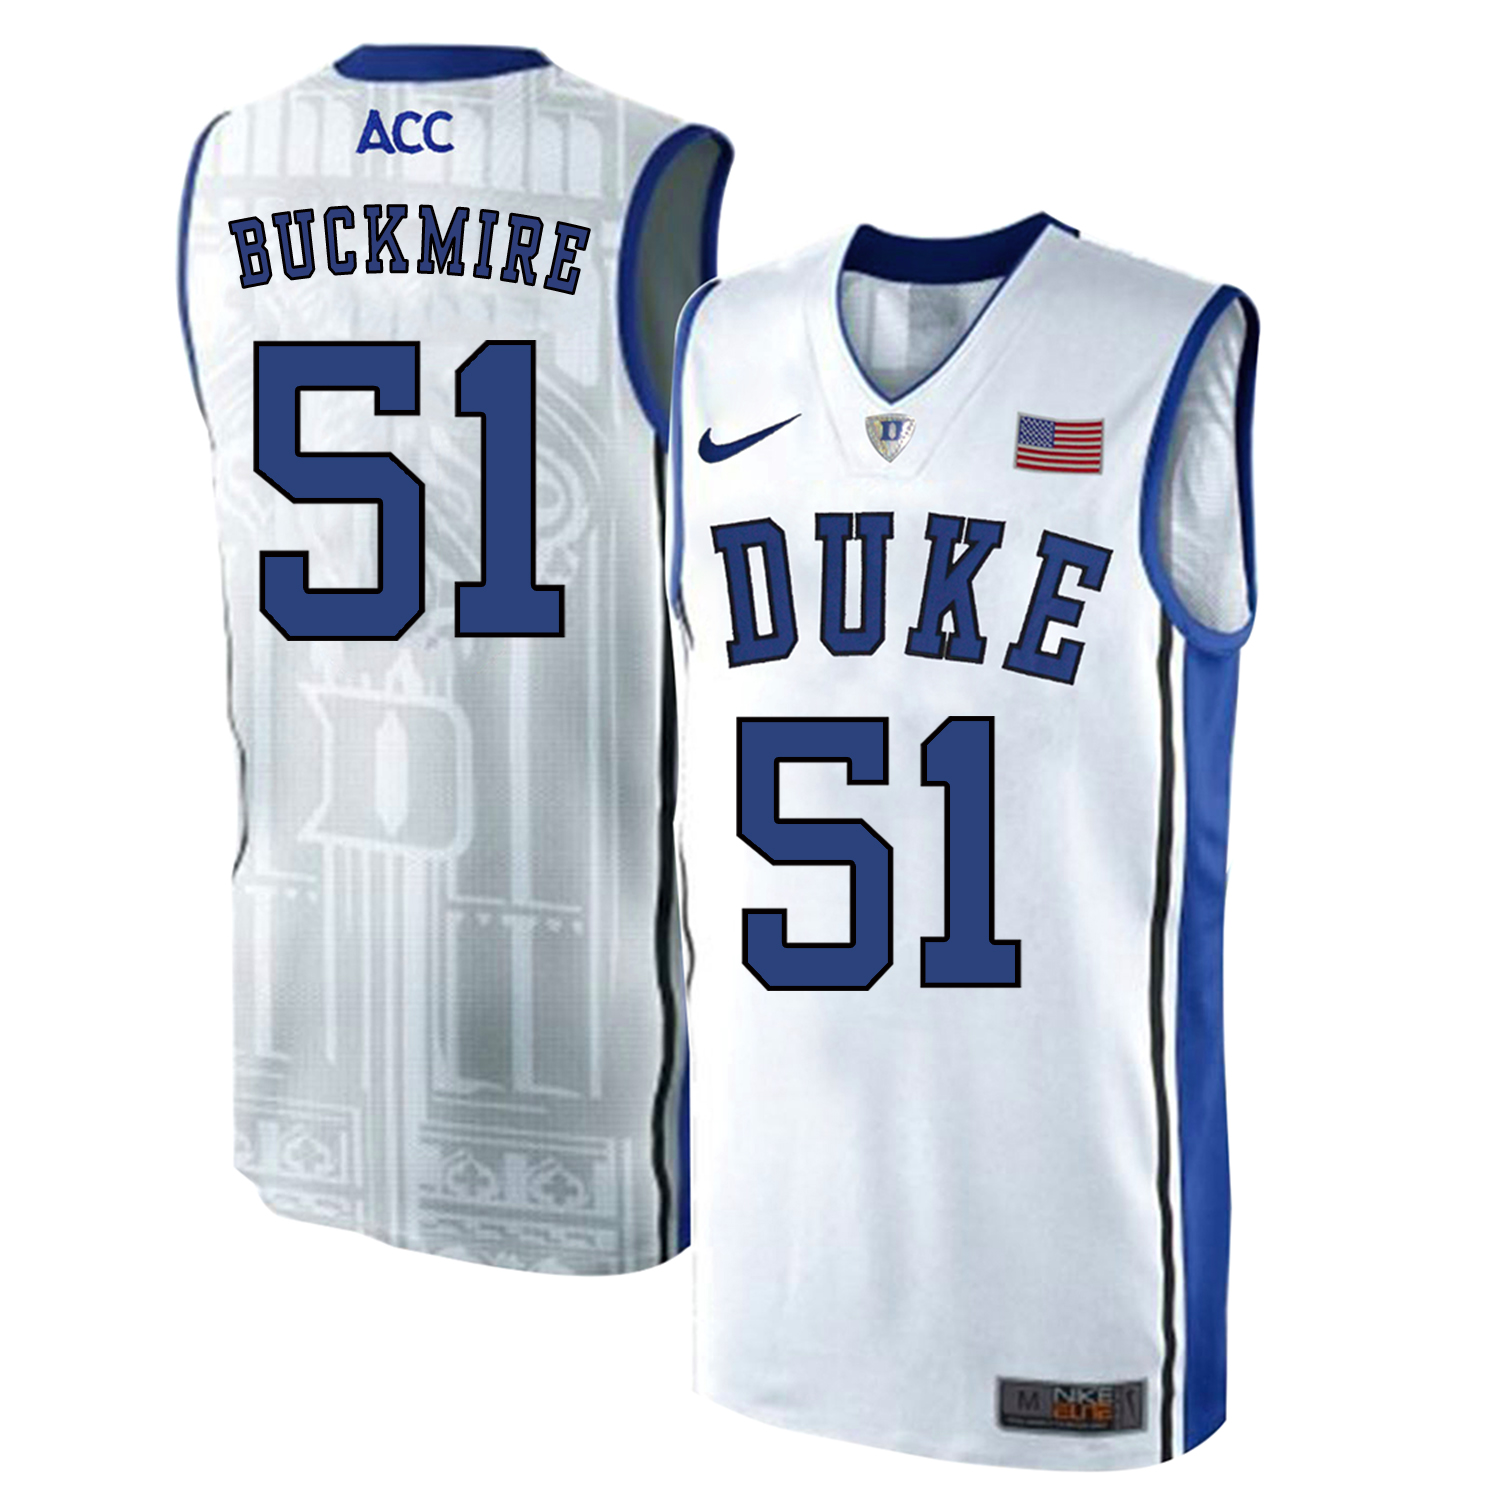 Duke Blue Devils 51 Mike Buckmire White Elite Nike College Basketball Jersey